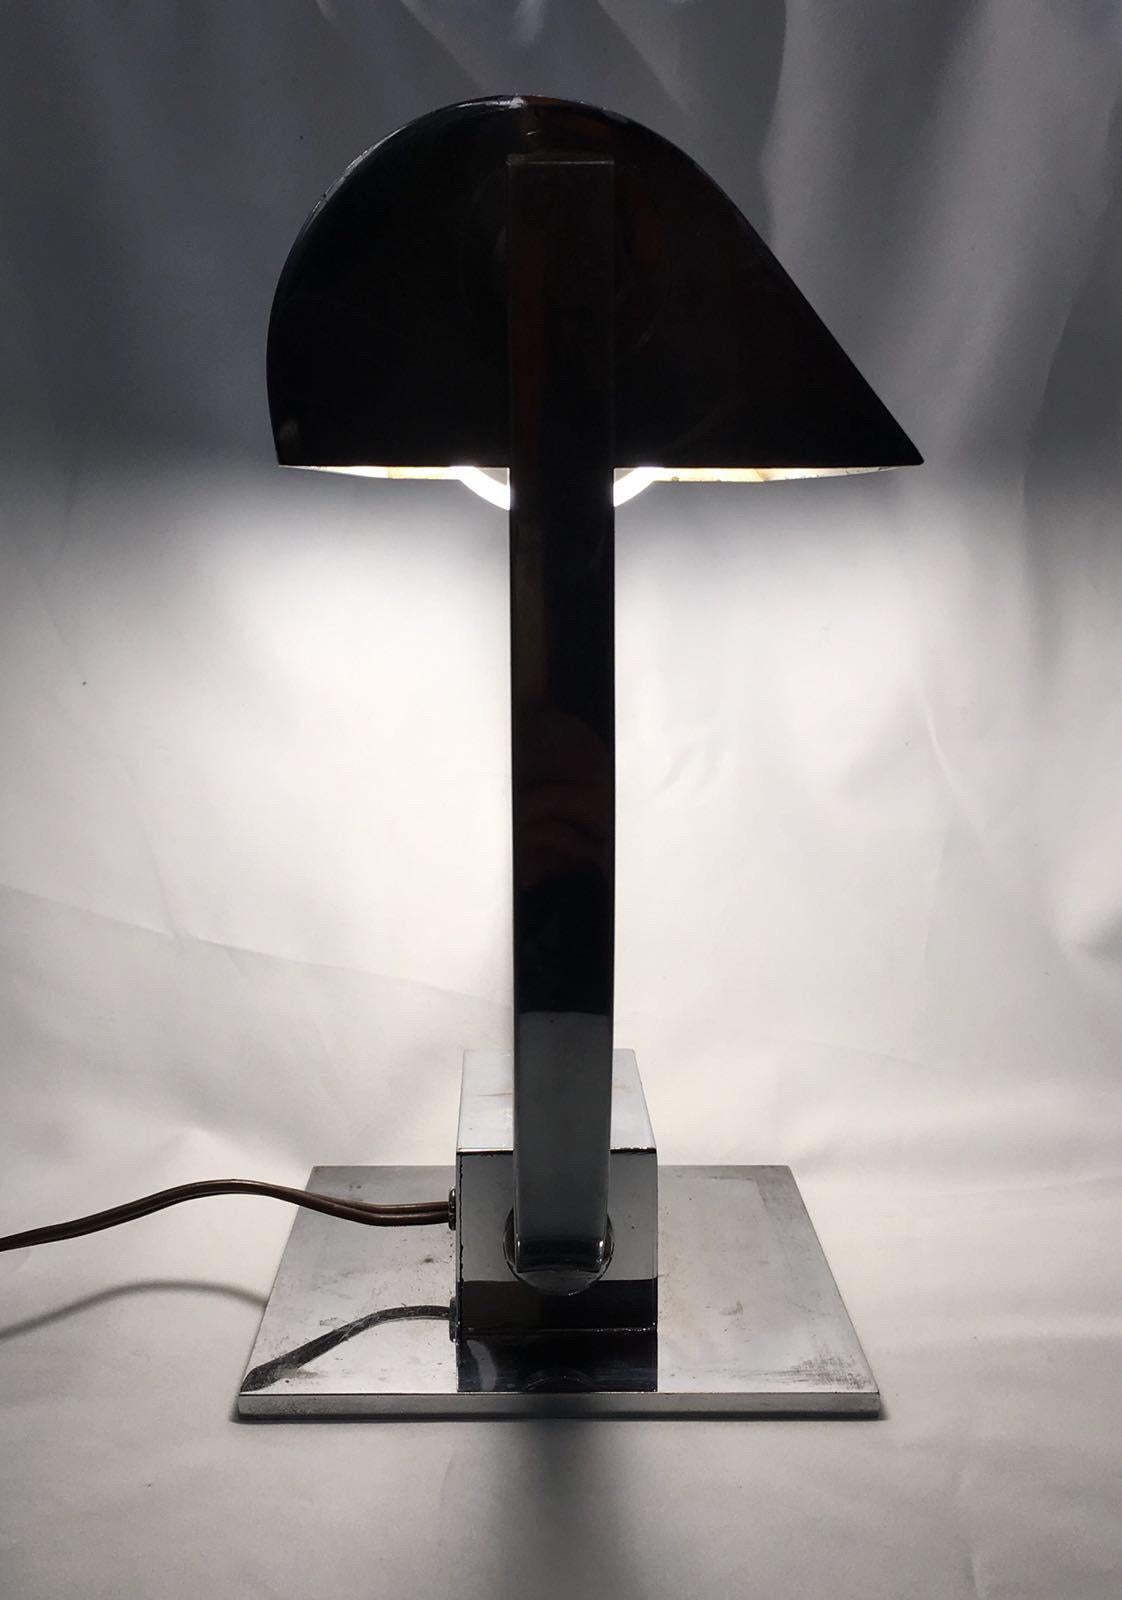 French Art Deco Modernist Desk Table Lamp in the Taste of Jacques Adnet